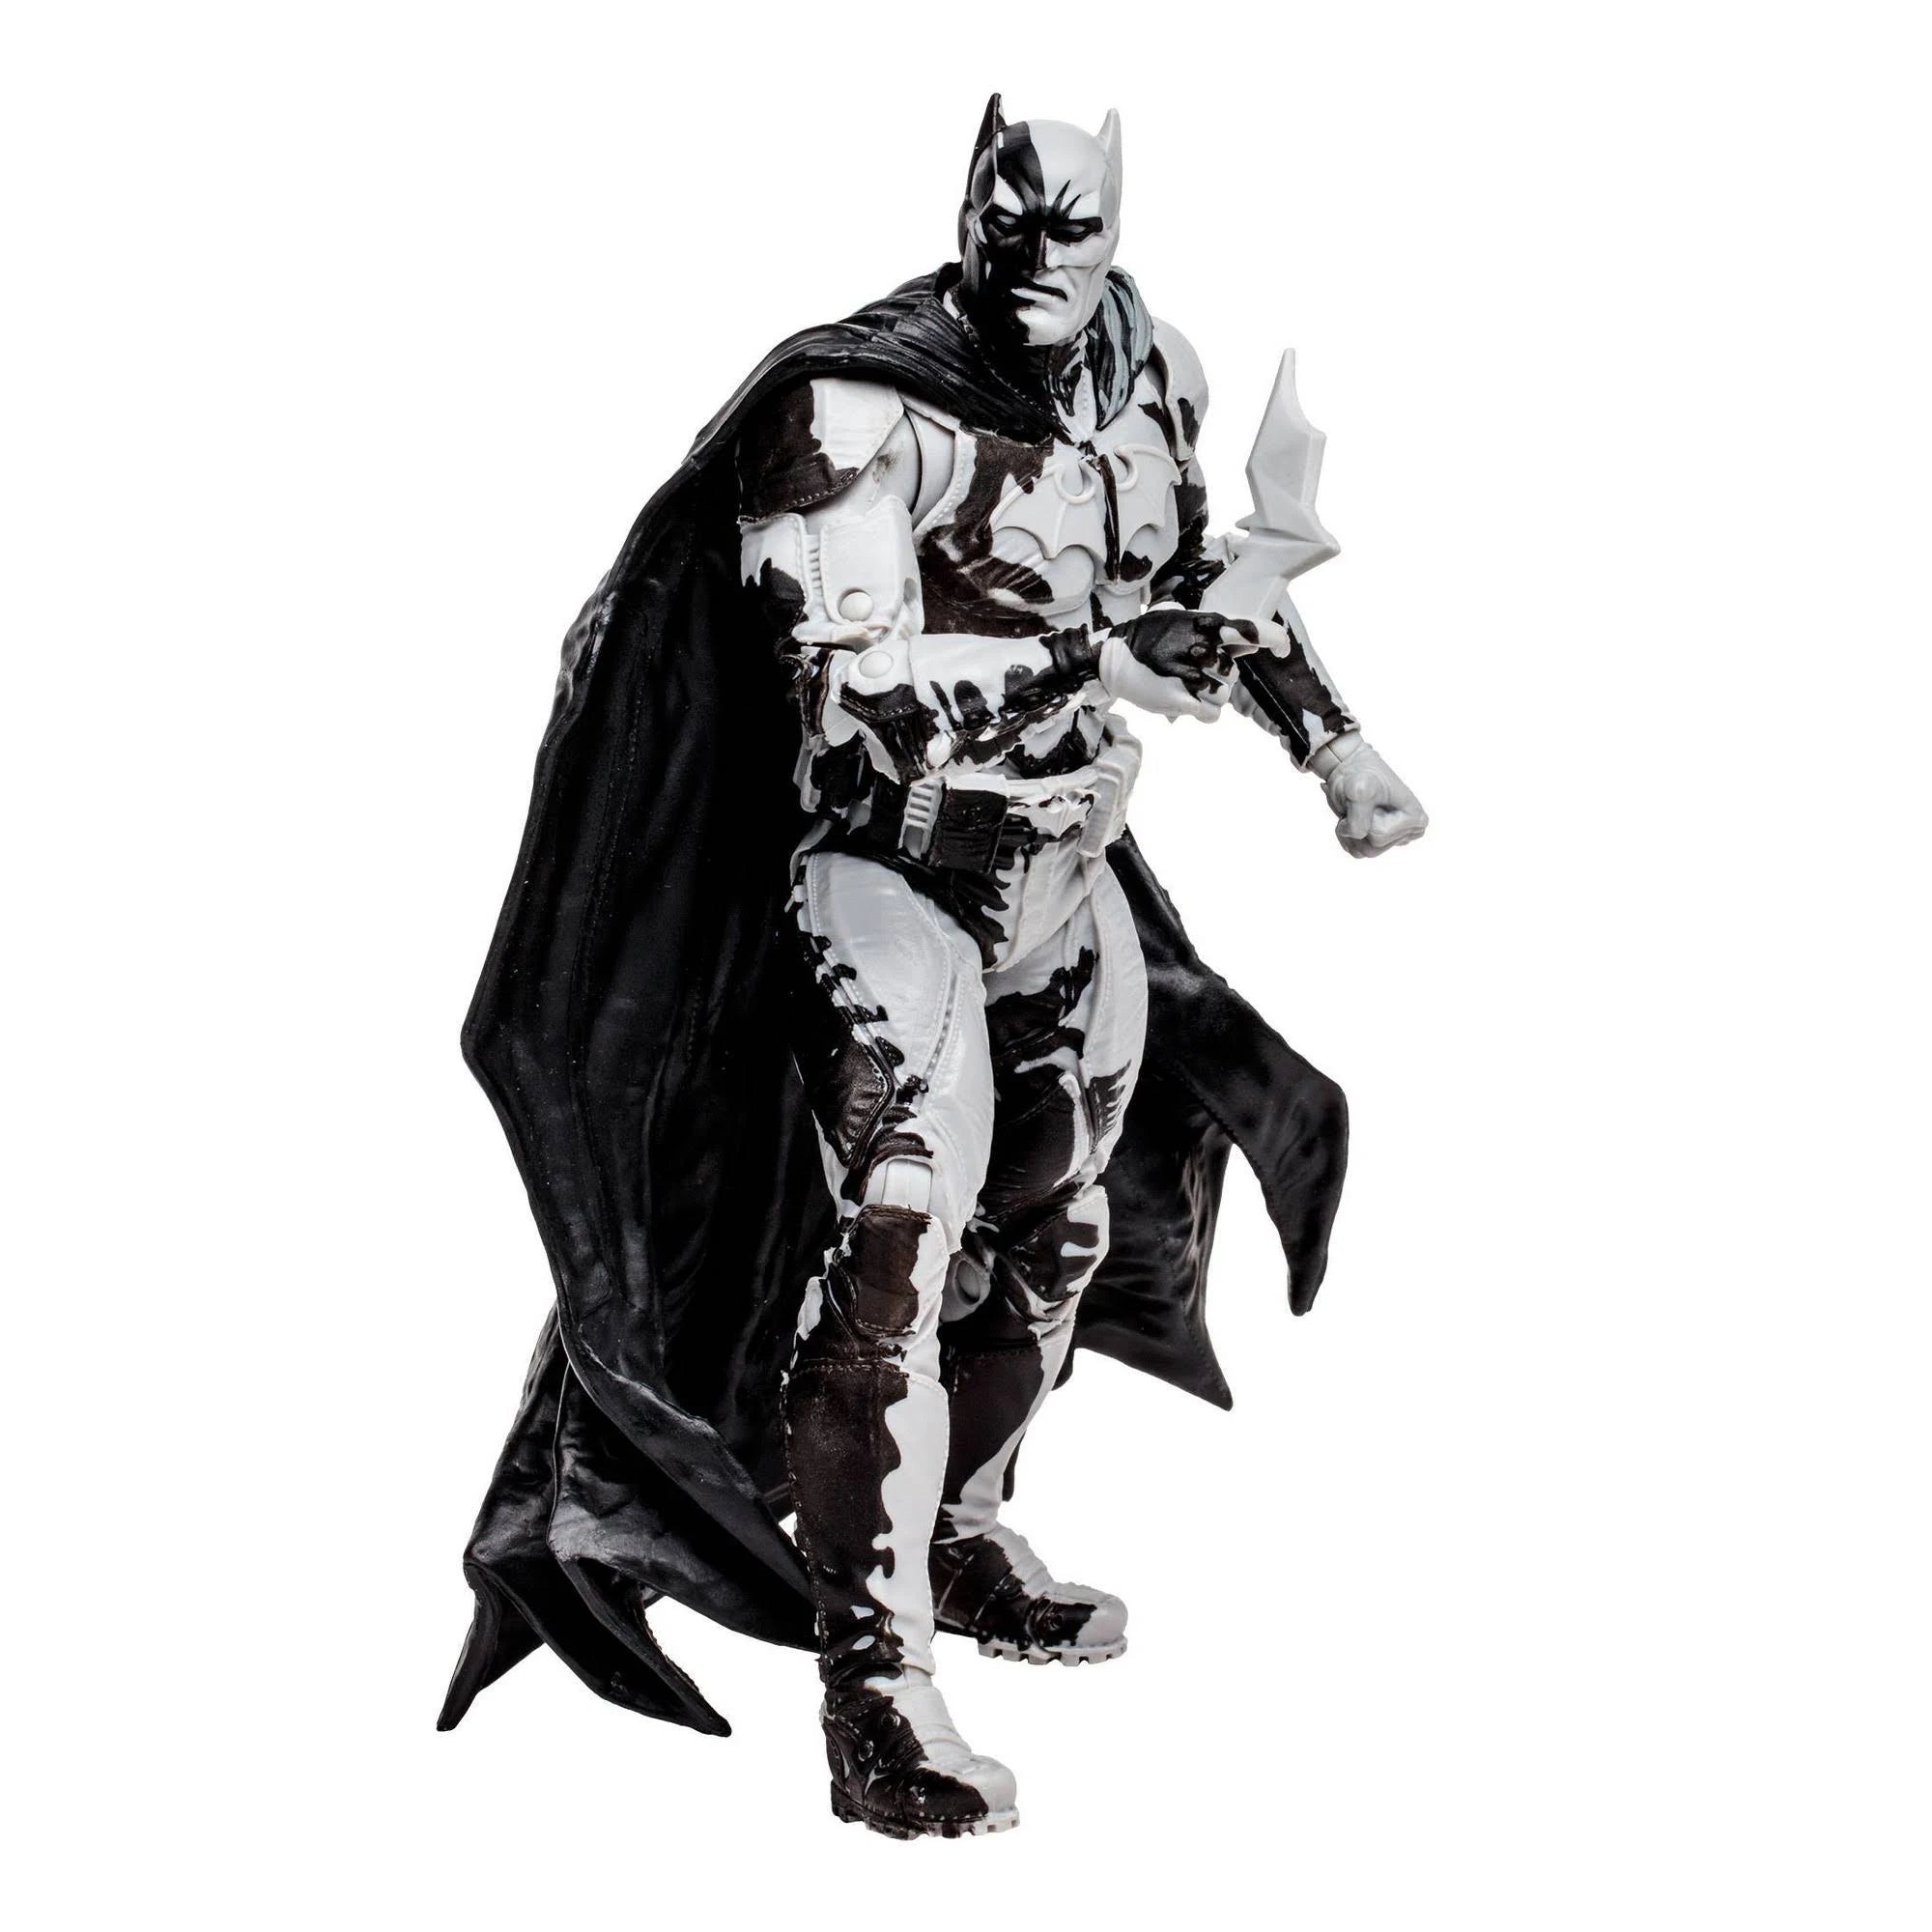 Batman Action Figure with DC Comics Black Adam Comic Book By McFarlane